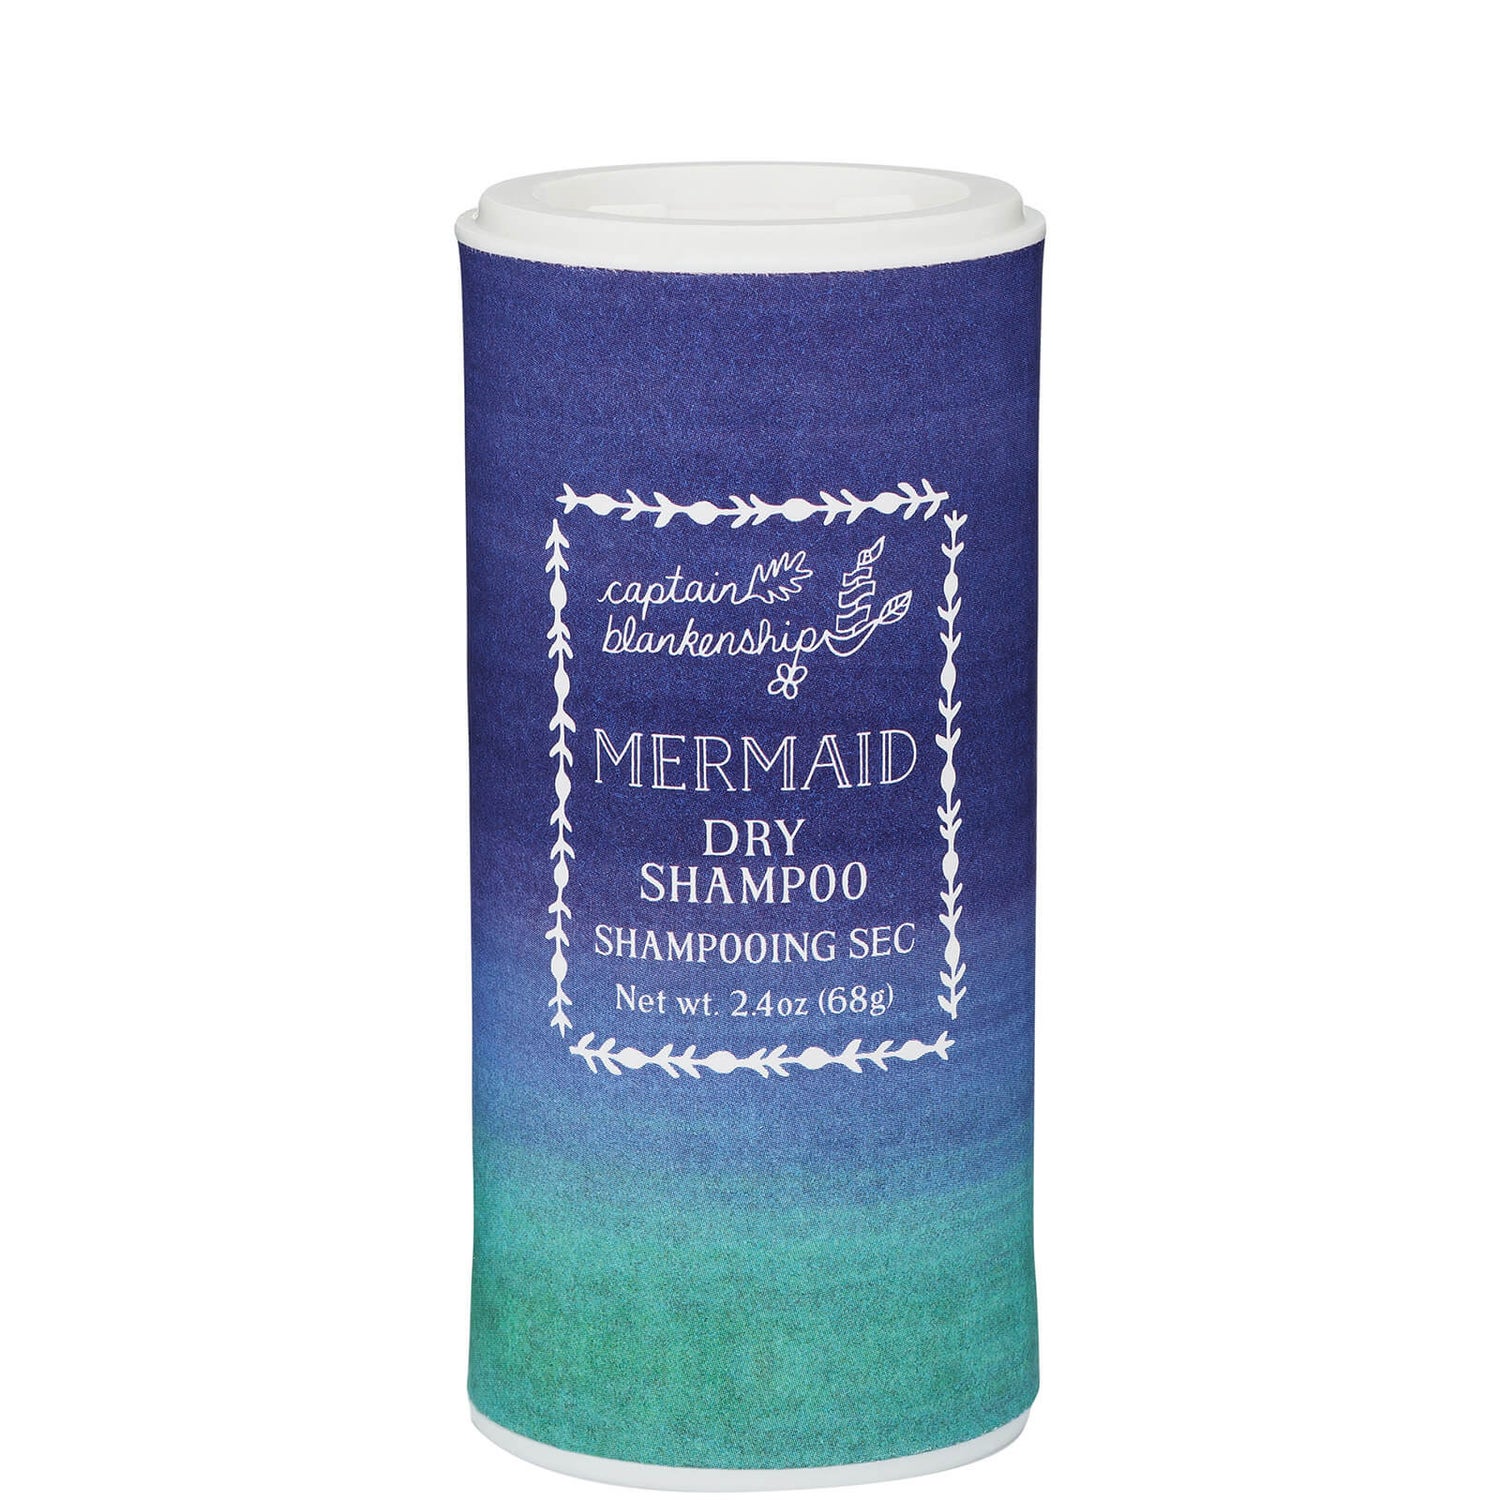 Blankenship Mermaid Dry Shampoo | Cult Beauty